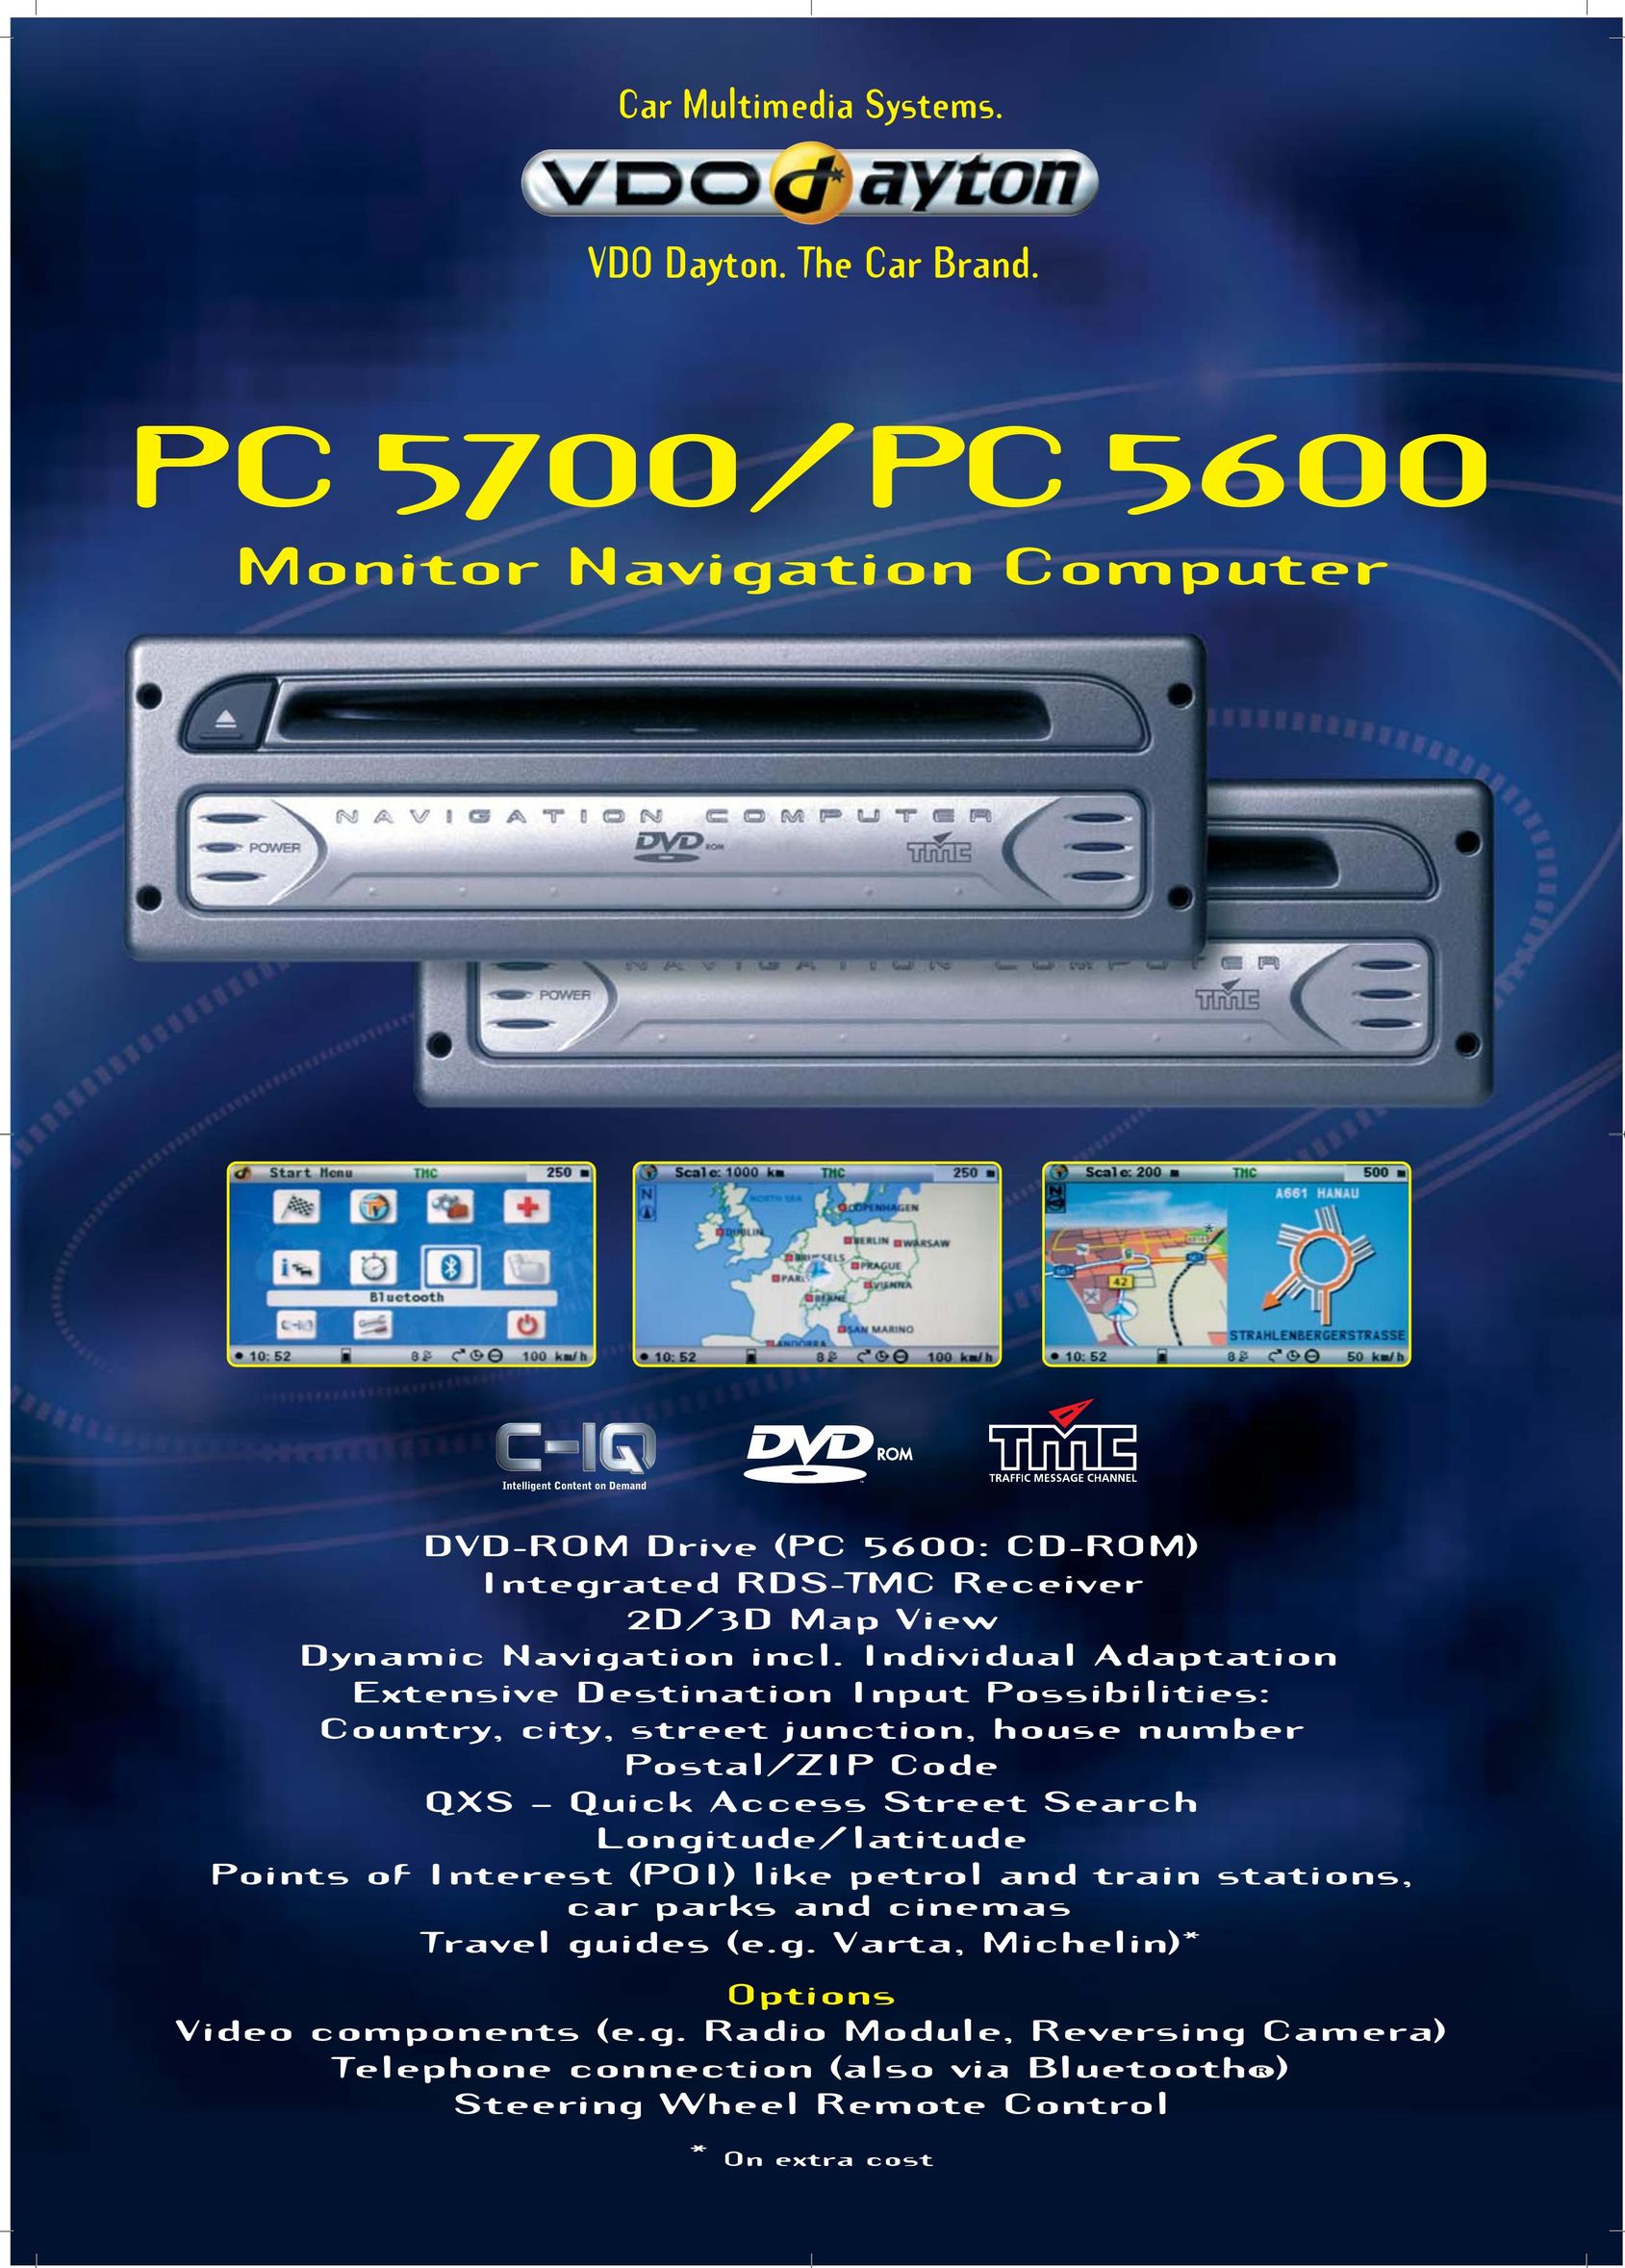 VDO Dayton PC 5600 Personal Computer User Manual